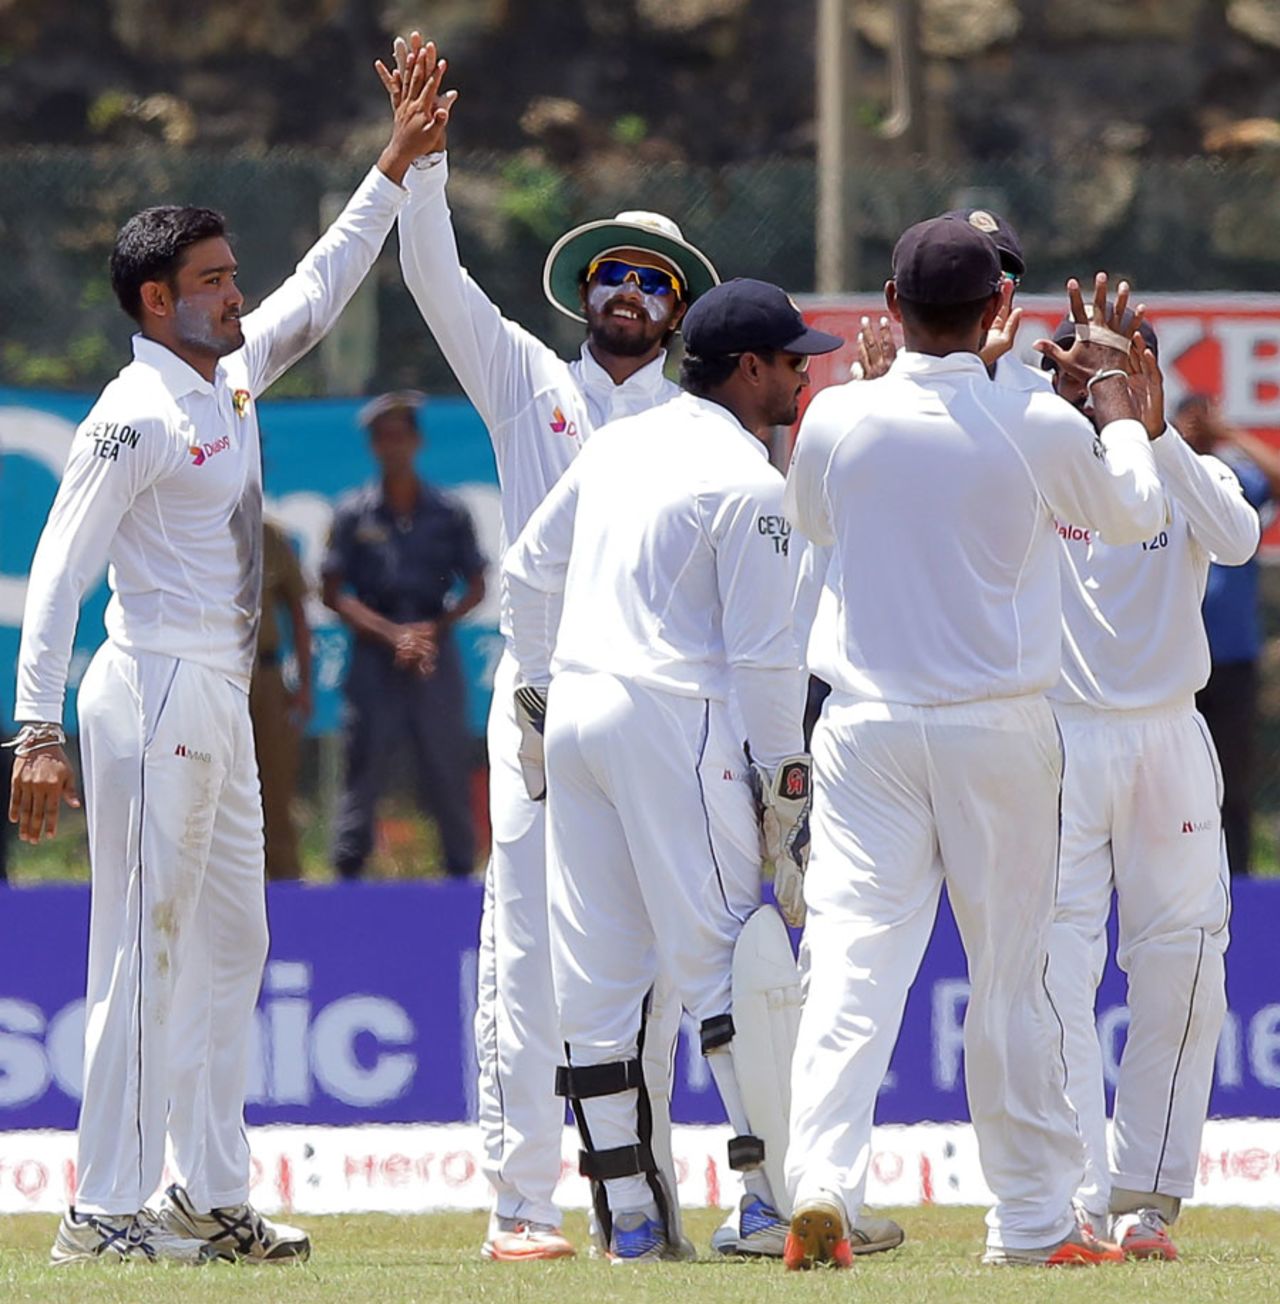 Milinda Siriwardana celebrates the wicket of Denesh Ramdin, Sri Lanka v West Indies, 1st Test, Galle, 4th day, October 17, 2015